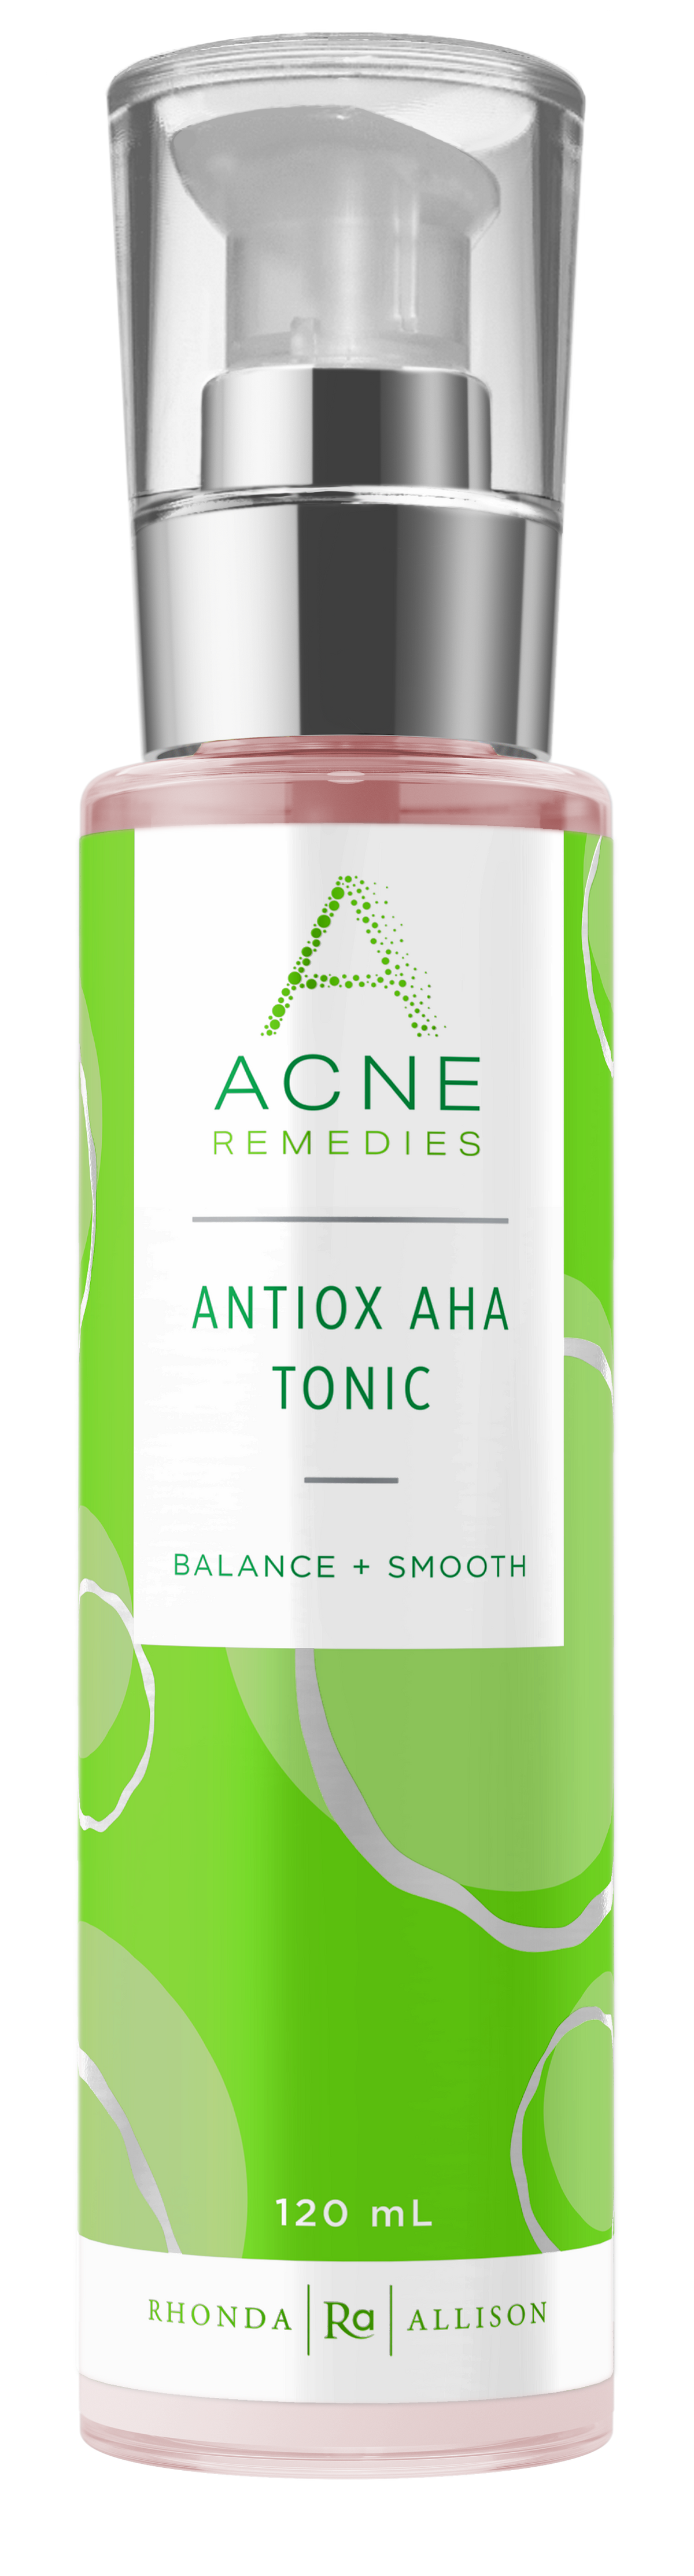 Antiox AHA Tonic - 15% off 30ml